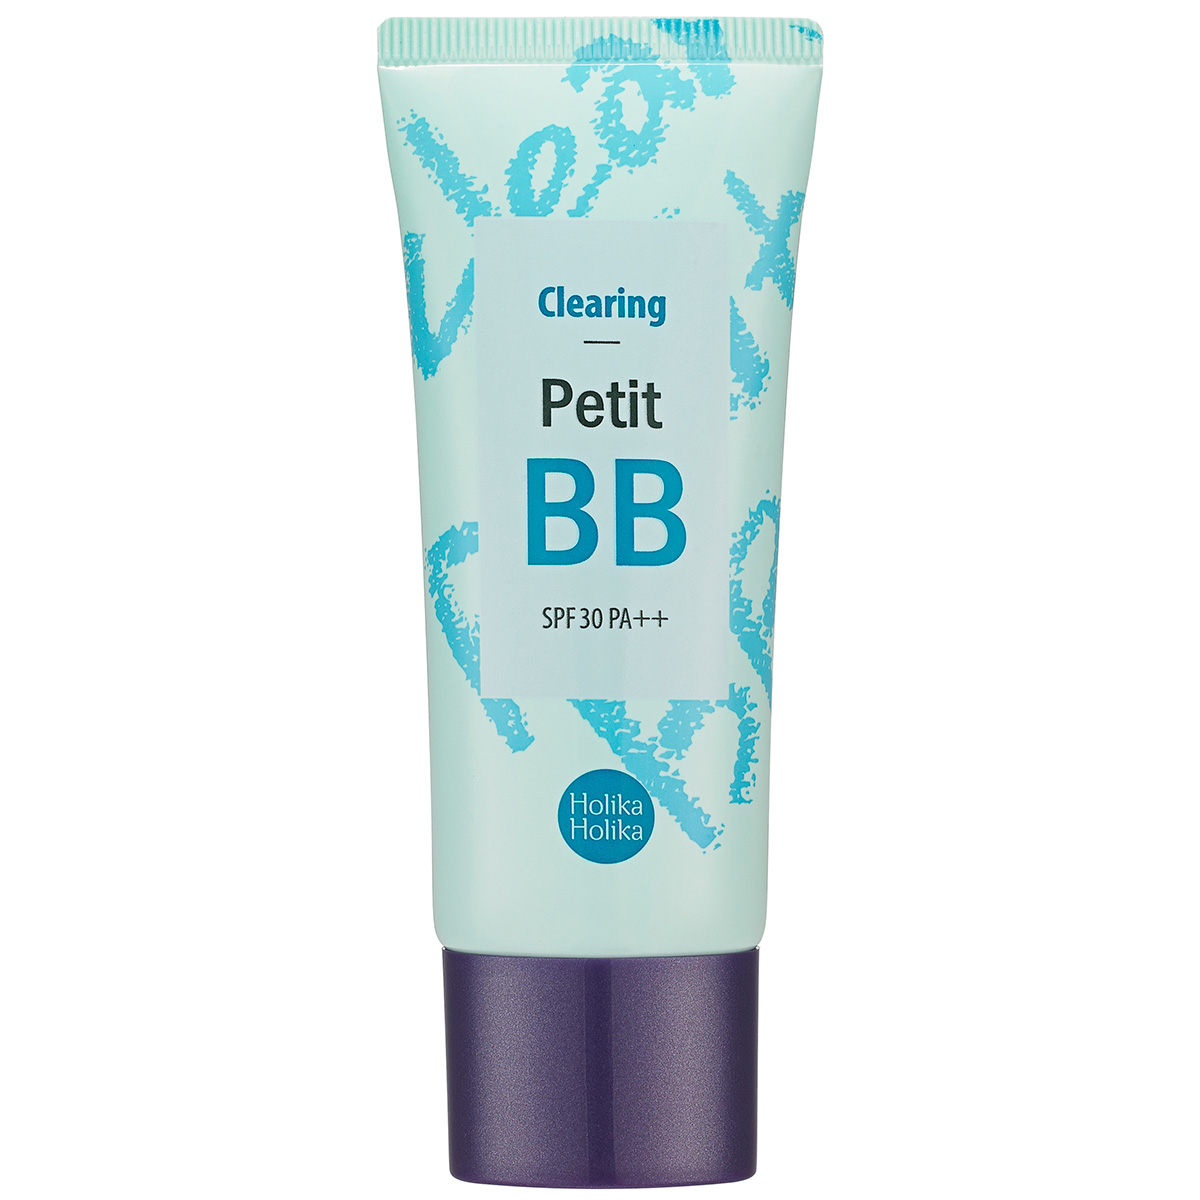 Clearing Petit BB Cream, 30 ml Holika Holika BB Cream